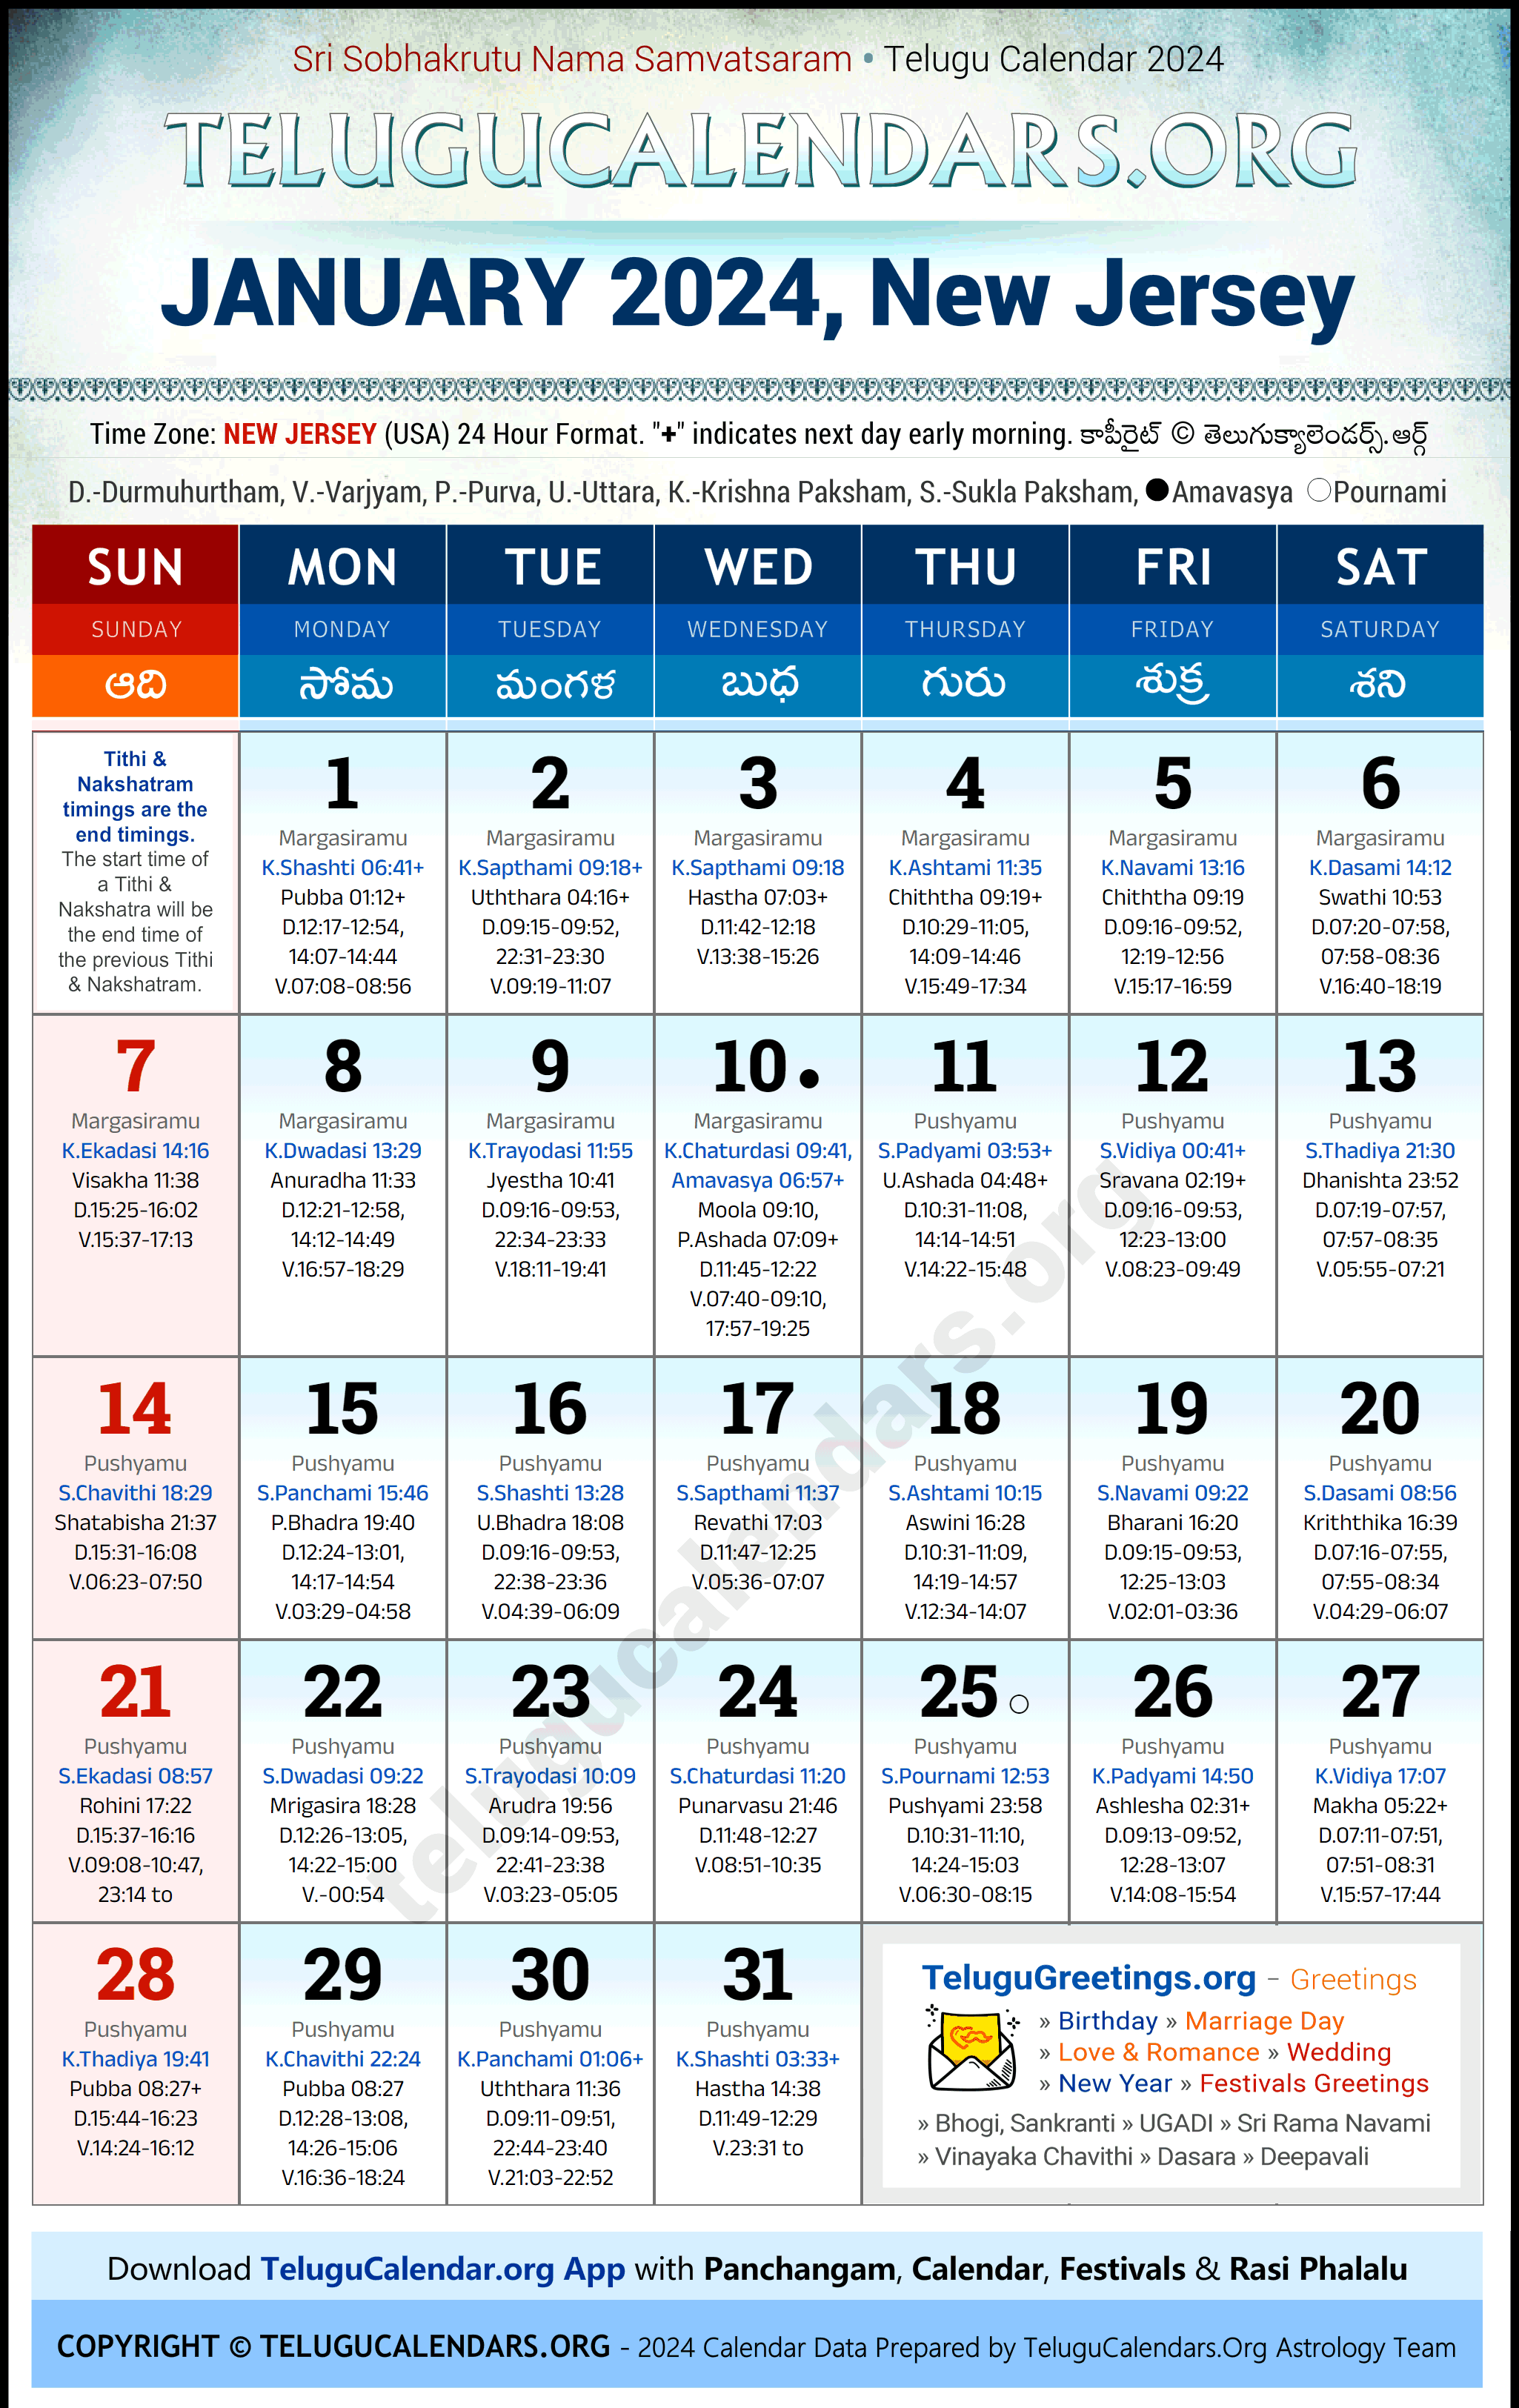 Telugu Calendar 2024 January Festivals for New Jersey